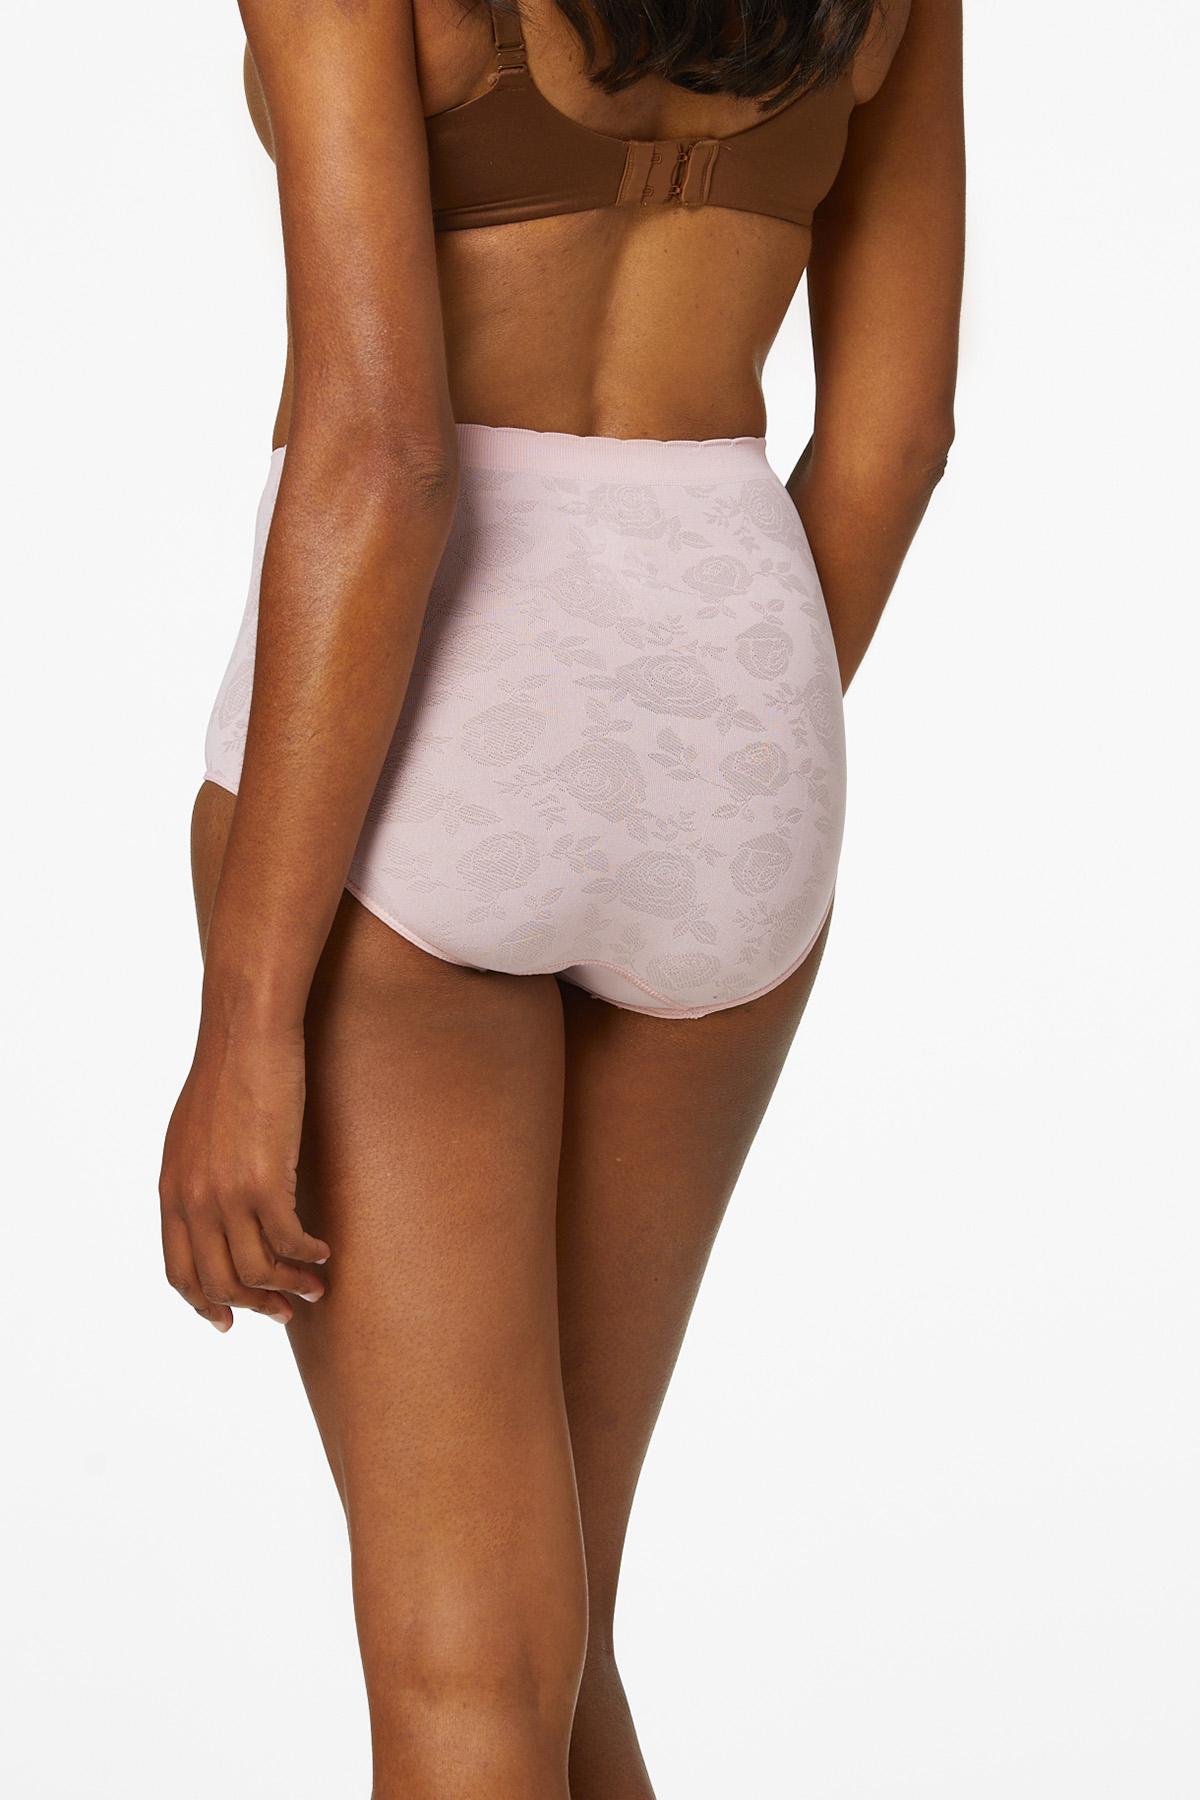 Fashions Cato Panty Size Cato Jacquard Brief | Set Plus